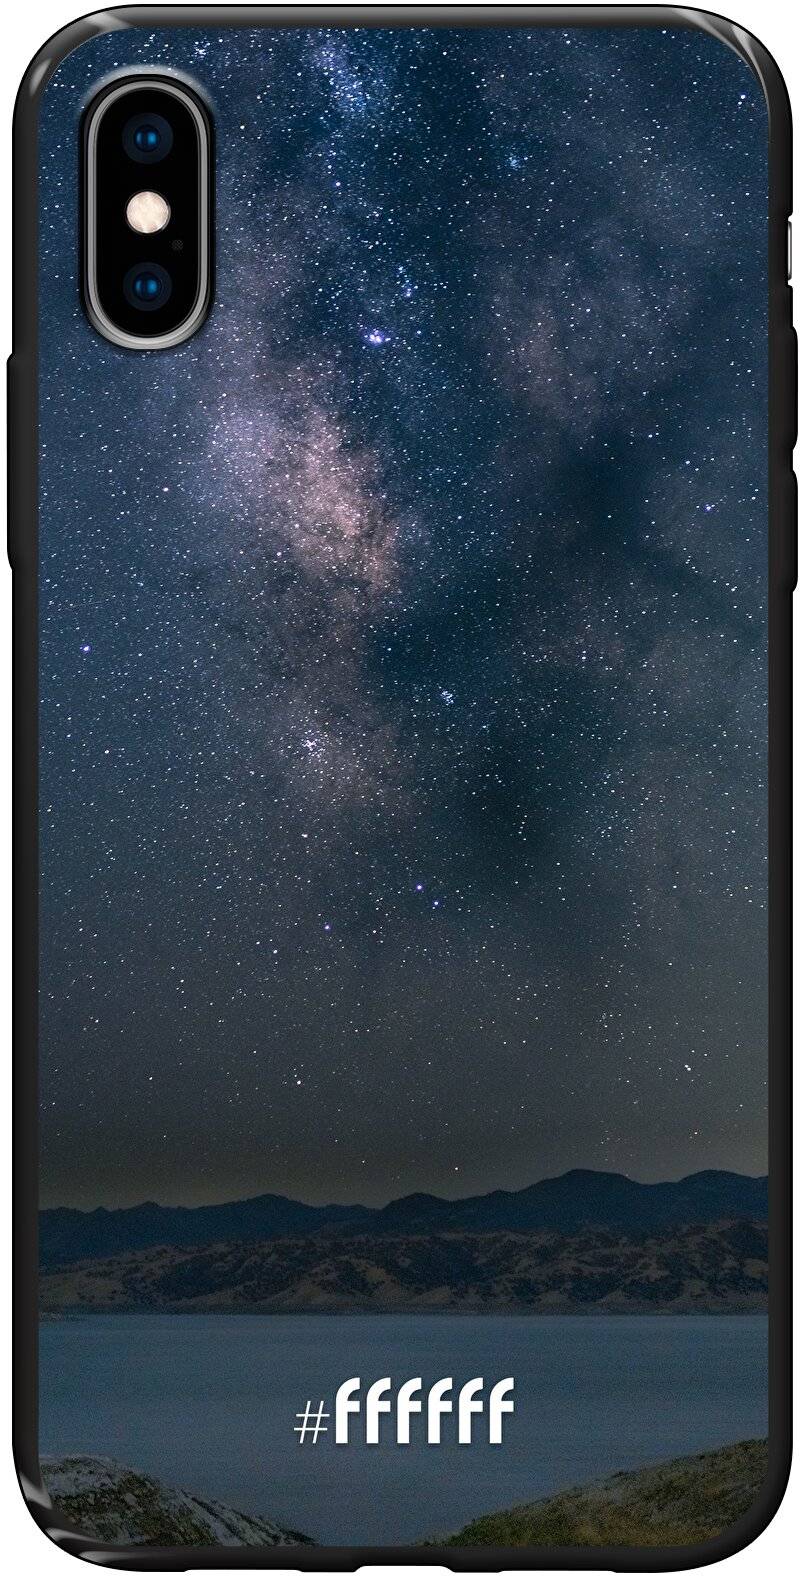 Landscape Milky Way iPhone X